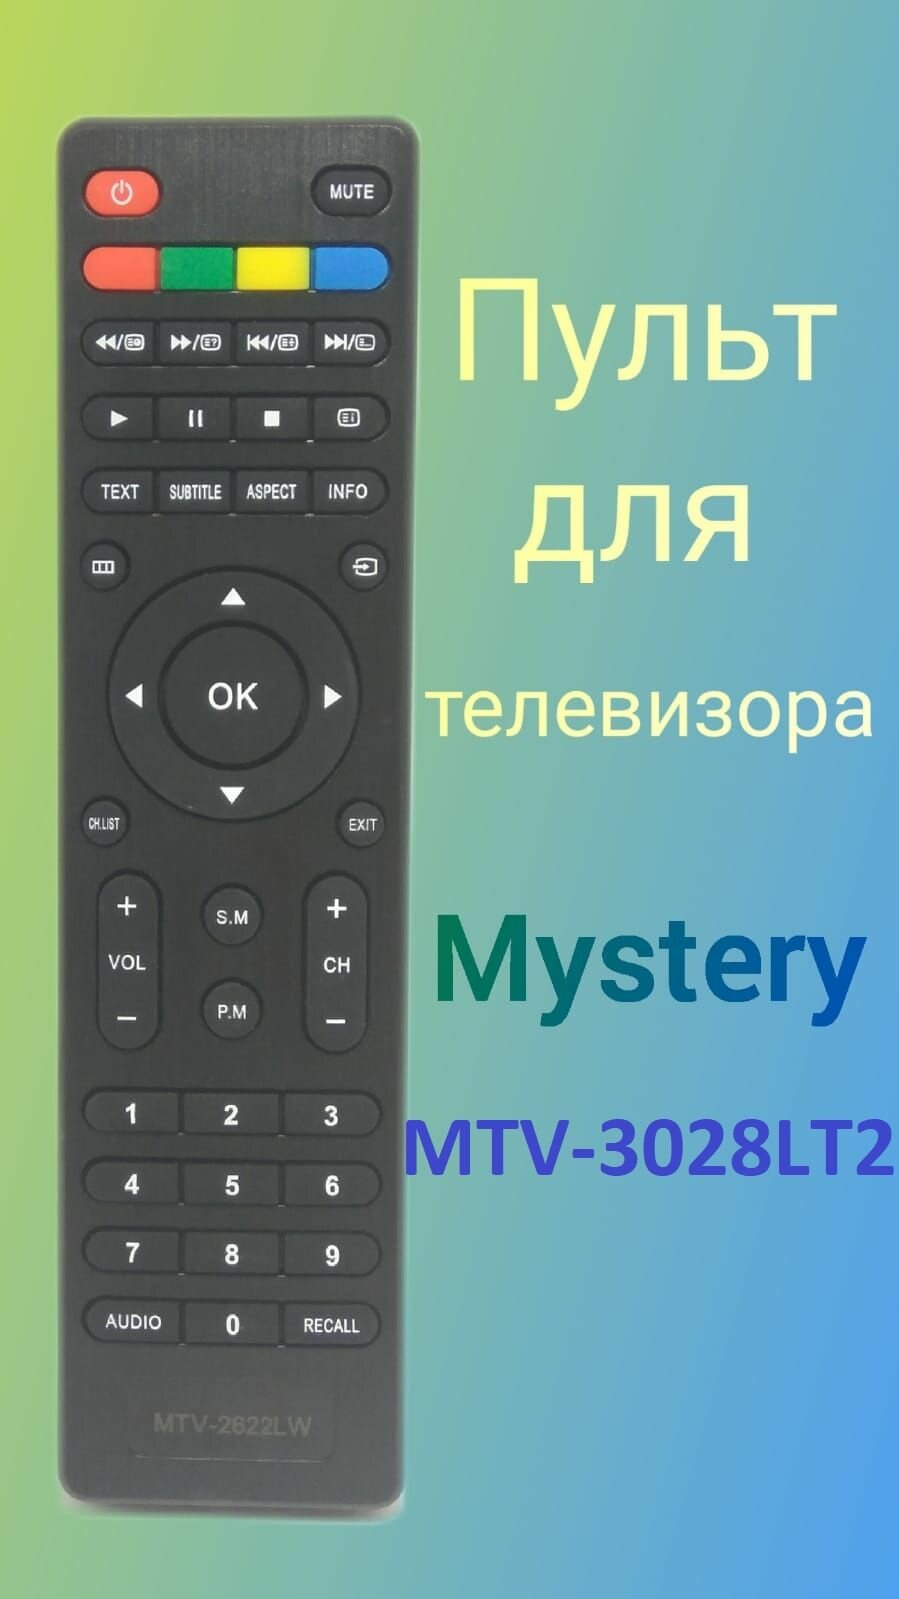 Пульт для телевизора Mystery MTV-3028LT2